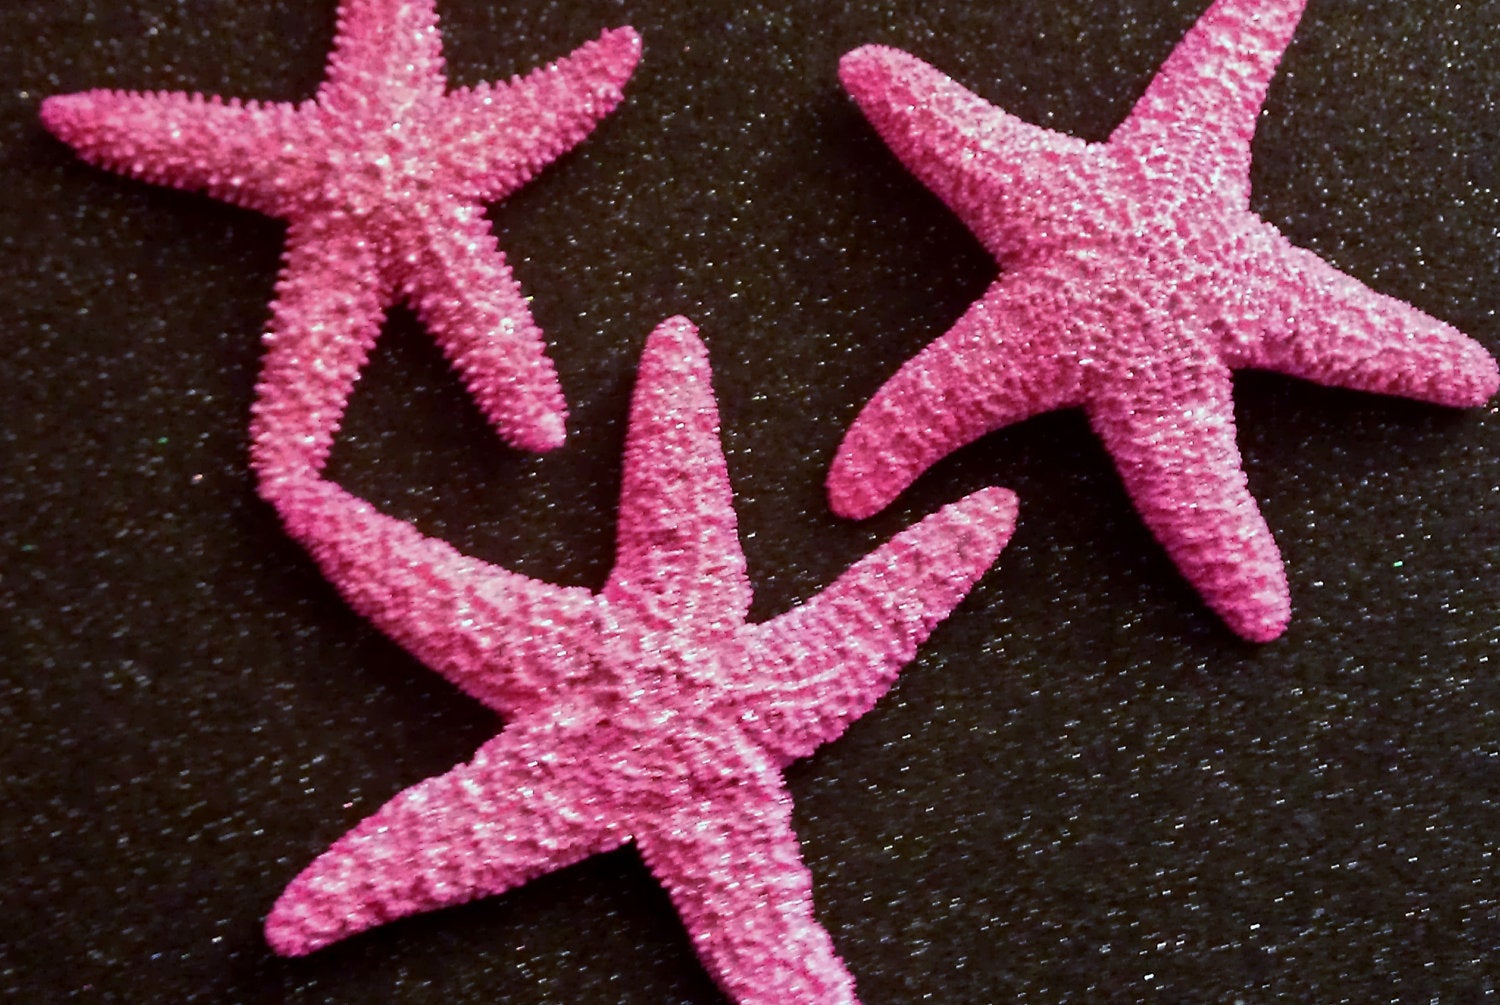 Surprising different types of starfish